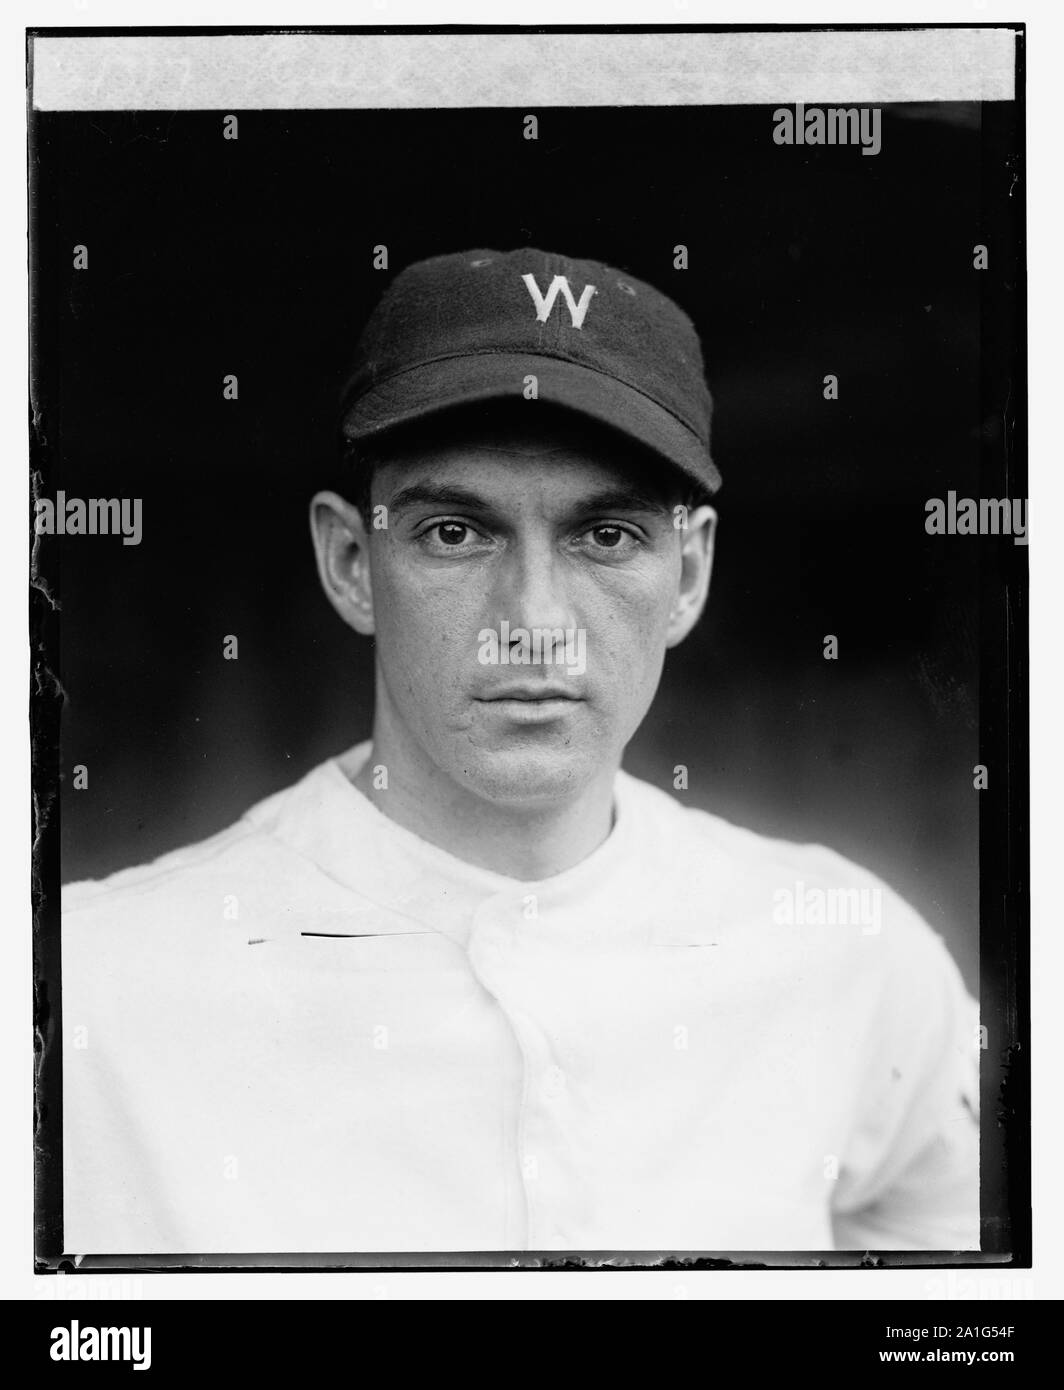 [Muddy] Ruel; [Muddy] Ruel, 1924 [Washington Senators]; Stock Photo